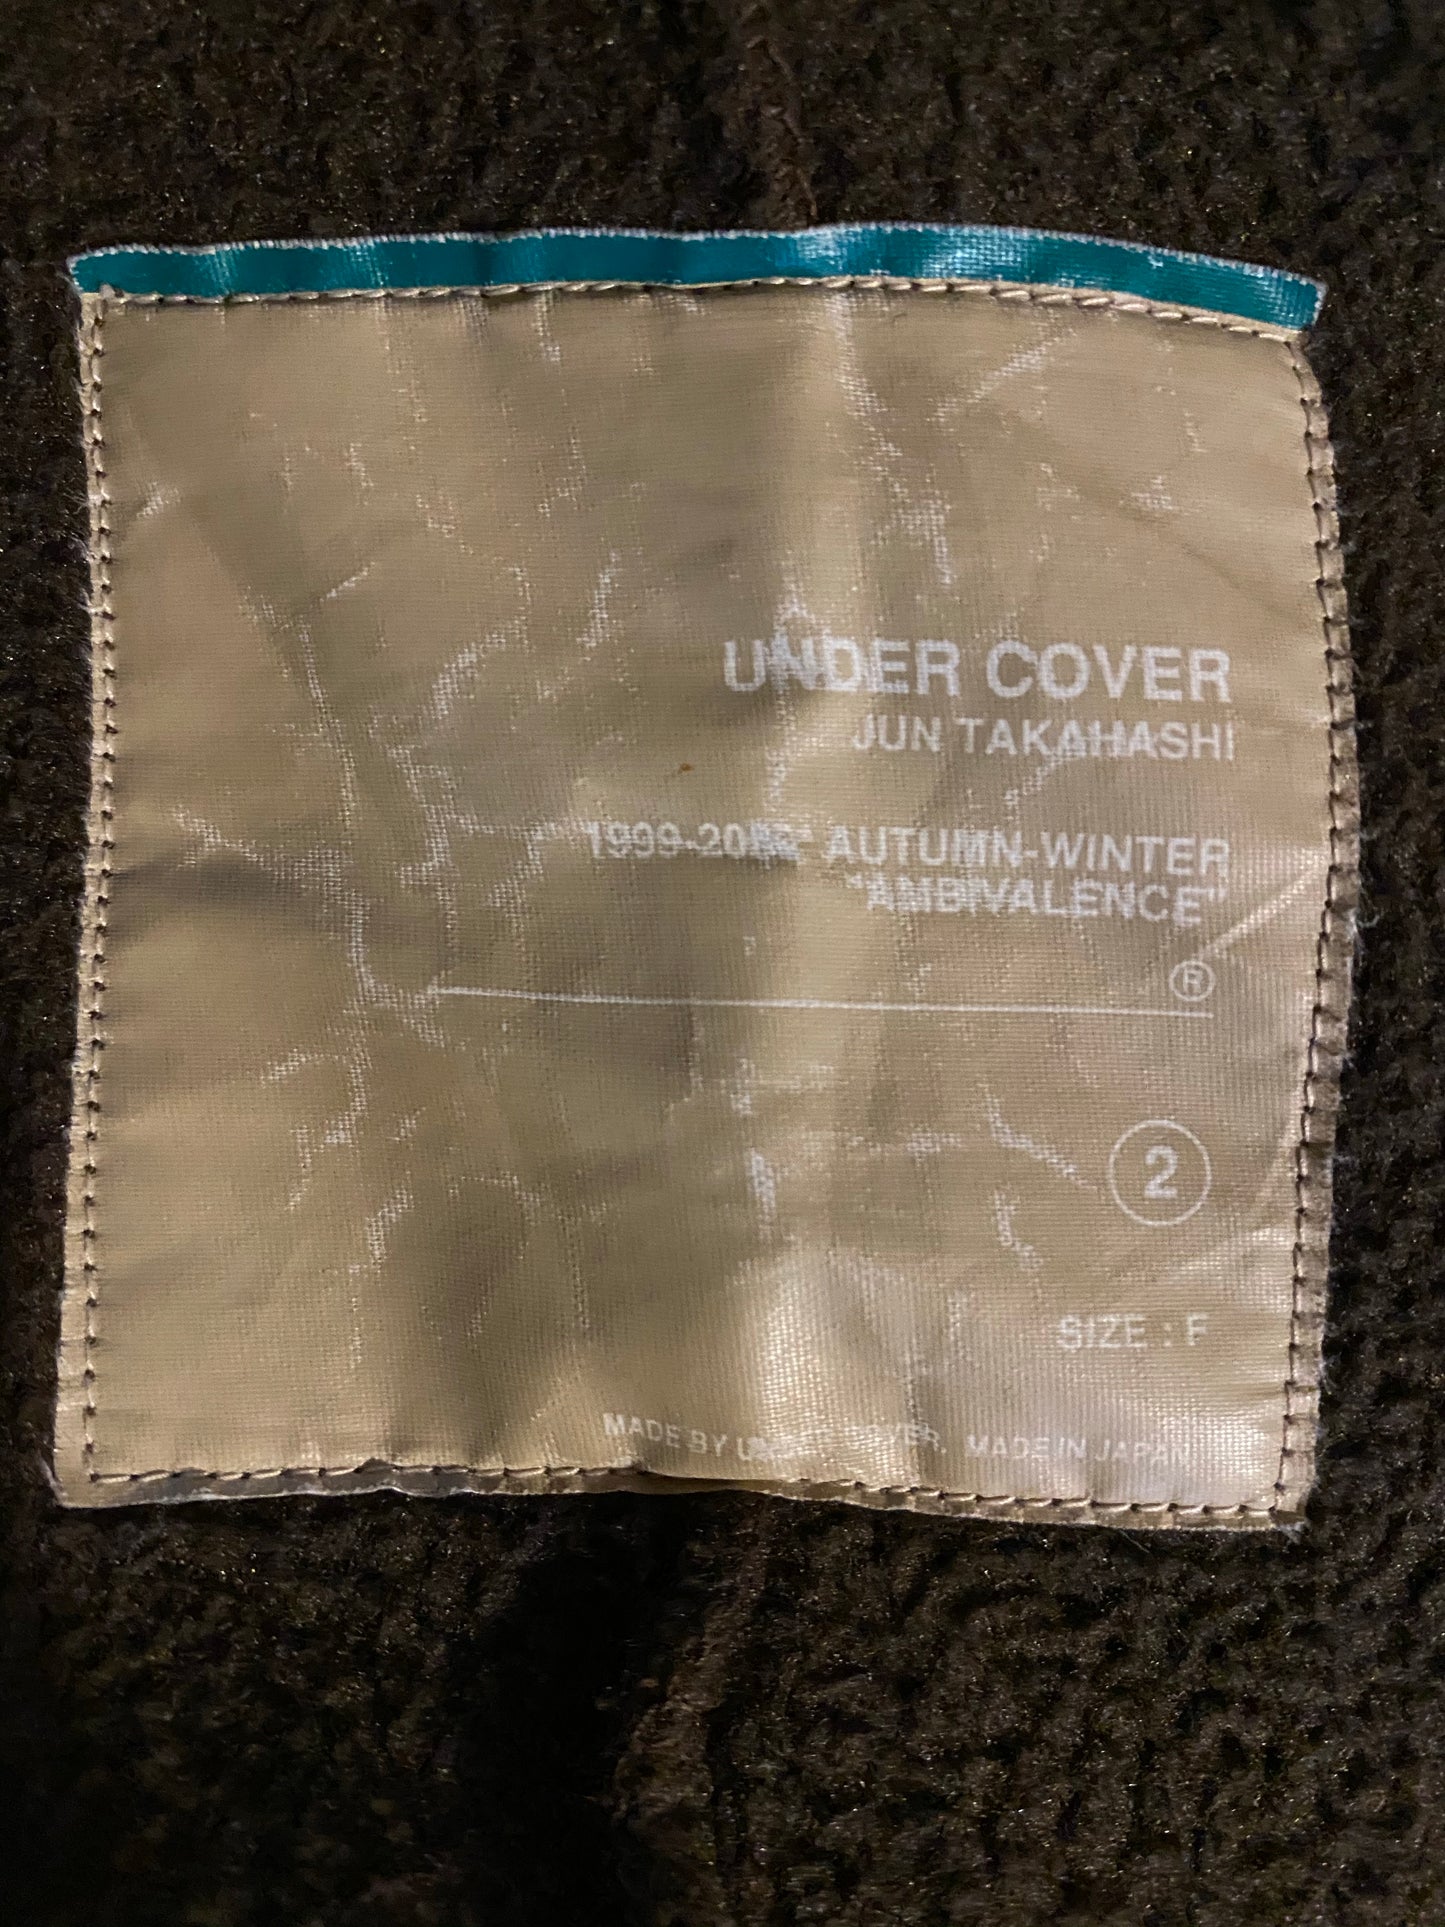 Undercover fleece “Small parts” zip up A/W99-00 “Ambivalence 2/Medium